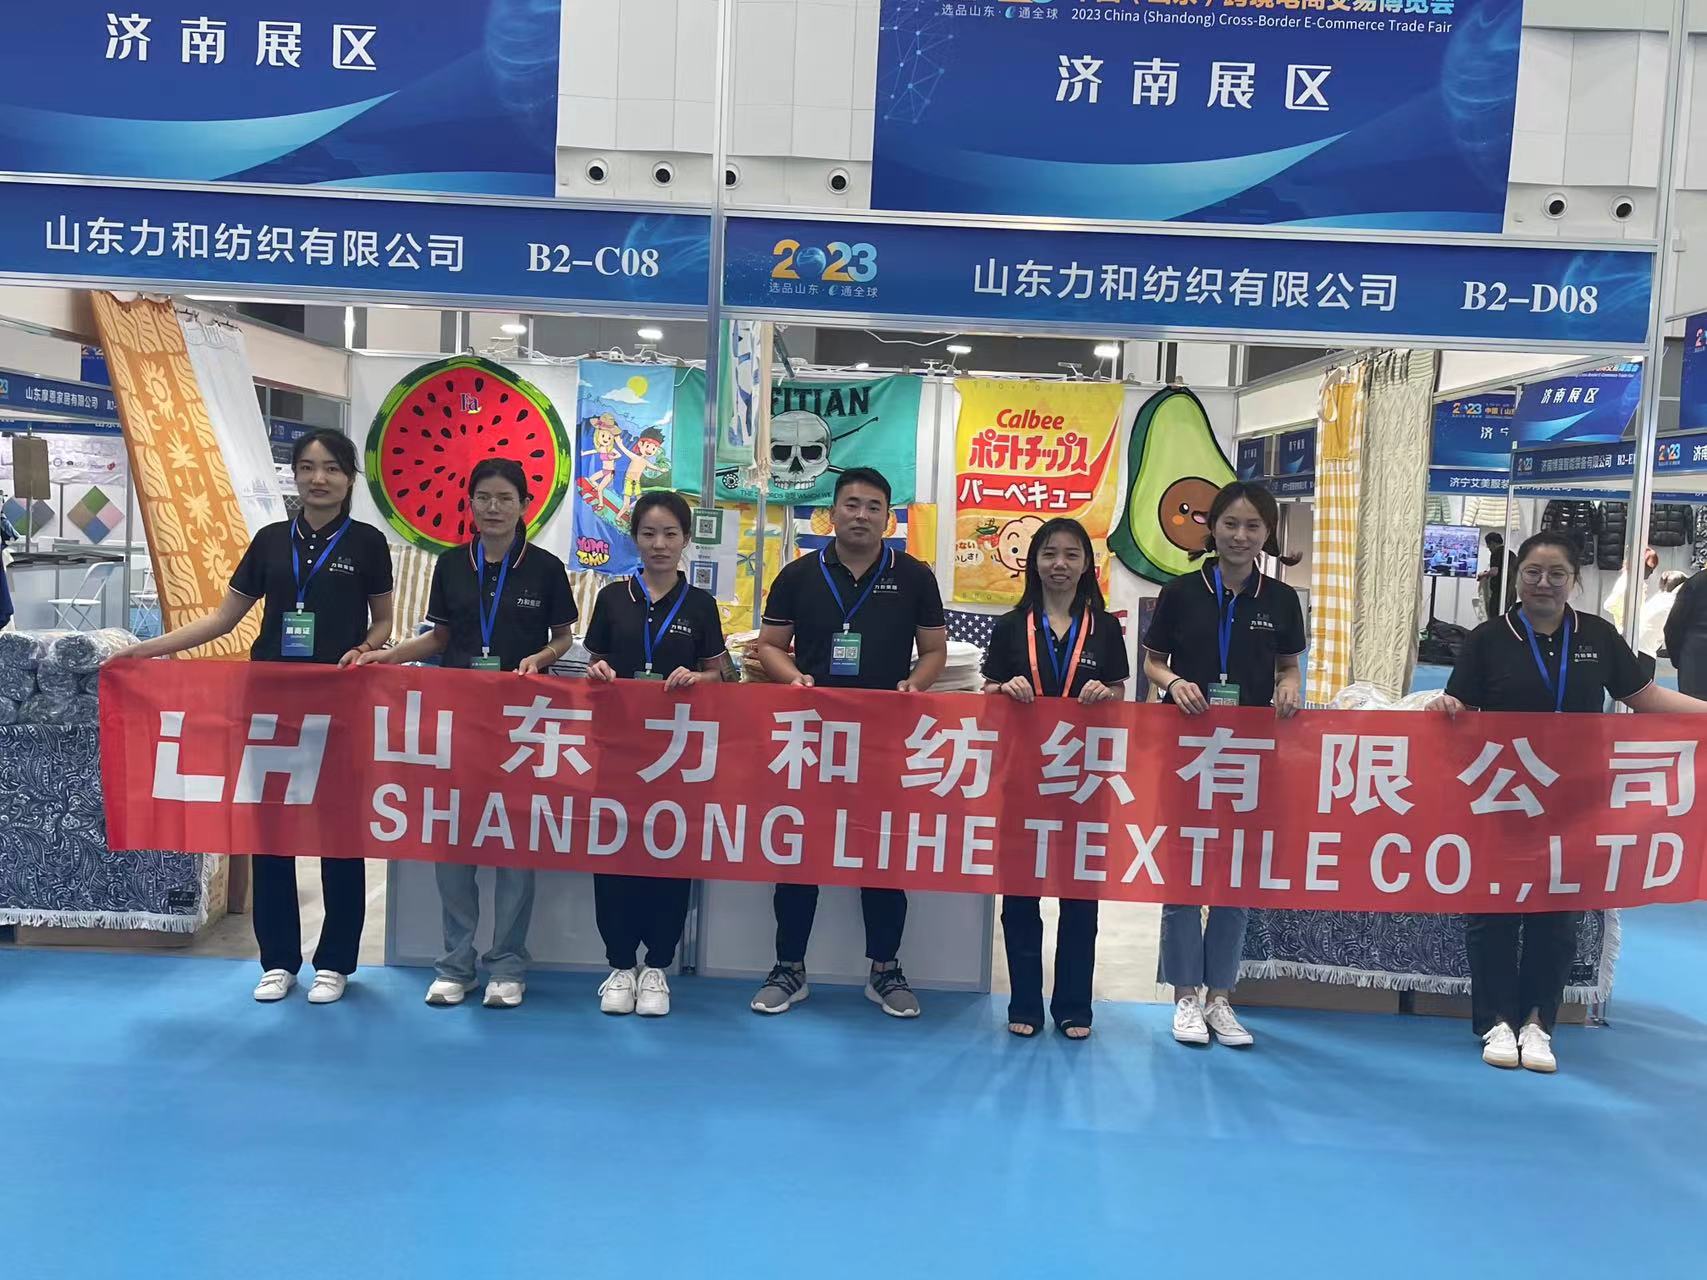 2023 China (Shandong) Cross-Border E-Commerce Trade Fair